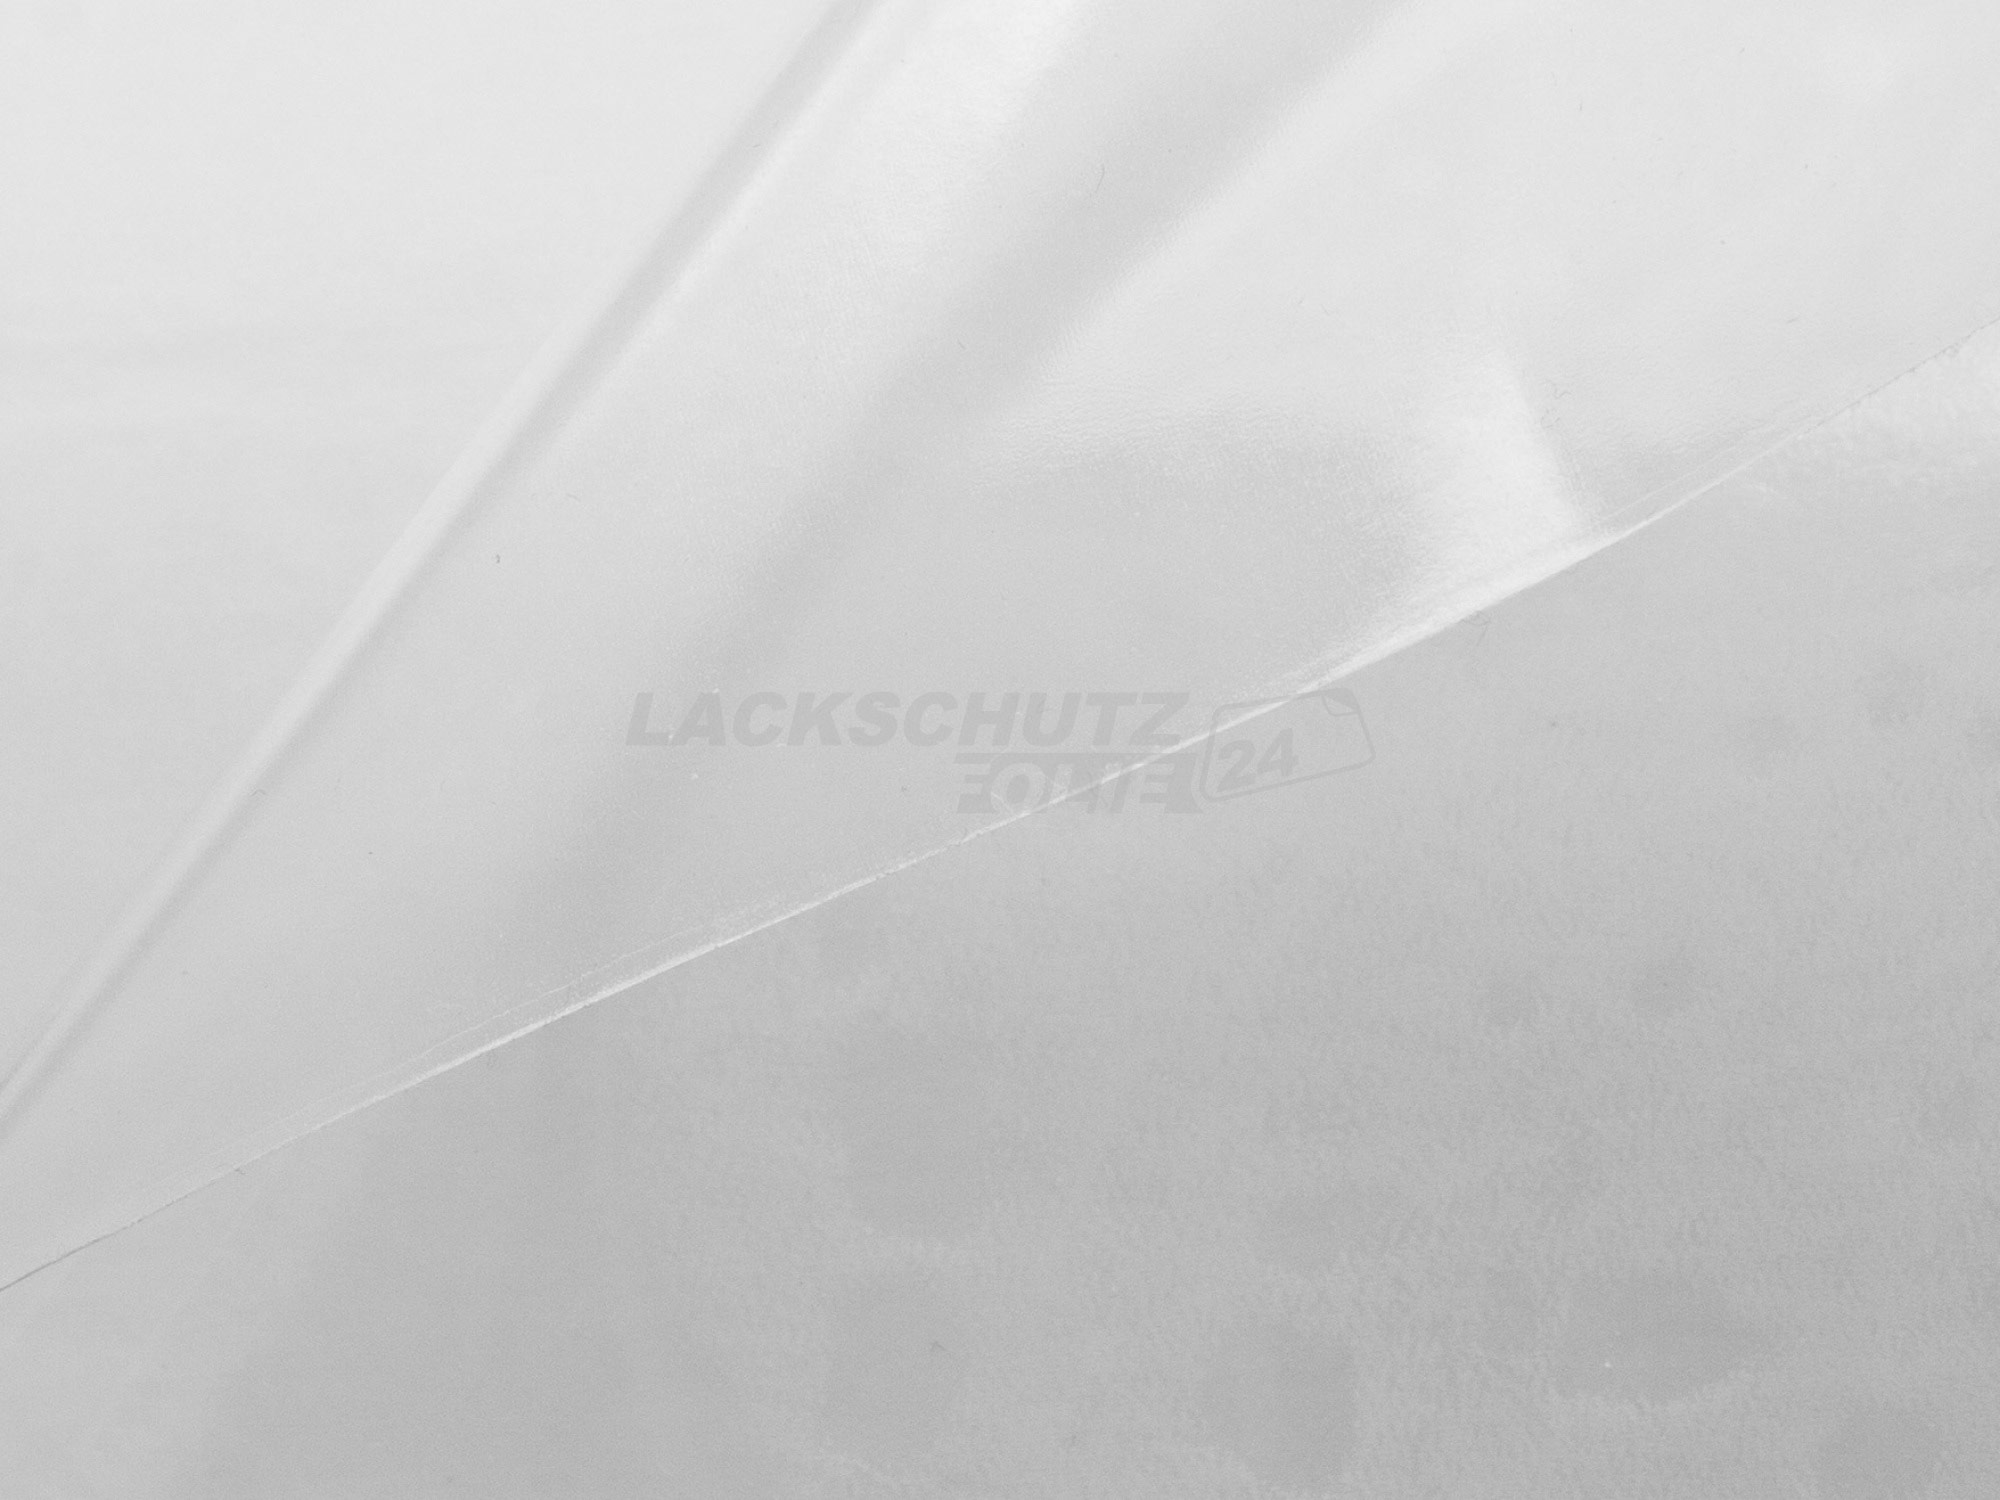 Ladekantenschutzfolie - Transparent Glatt Hochglänzend 150 µm stark für BMW 5er Touring (Kombi) Typ E61, BJ 2004-08/2010